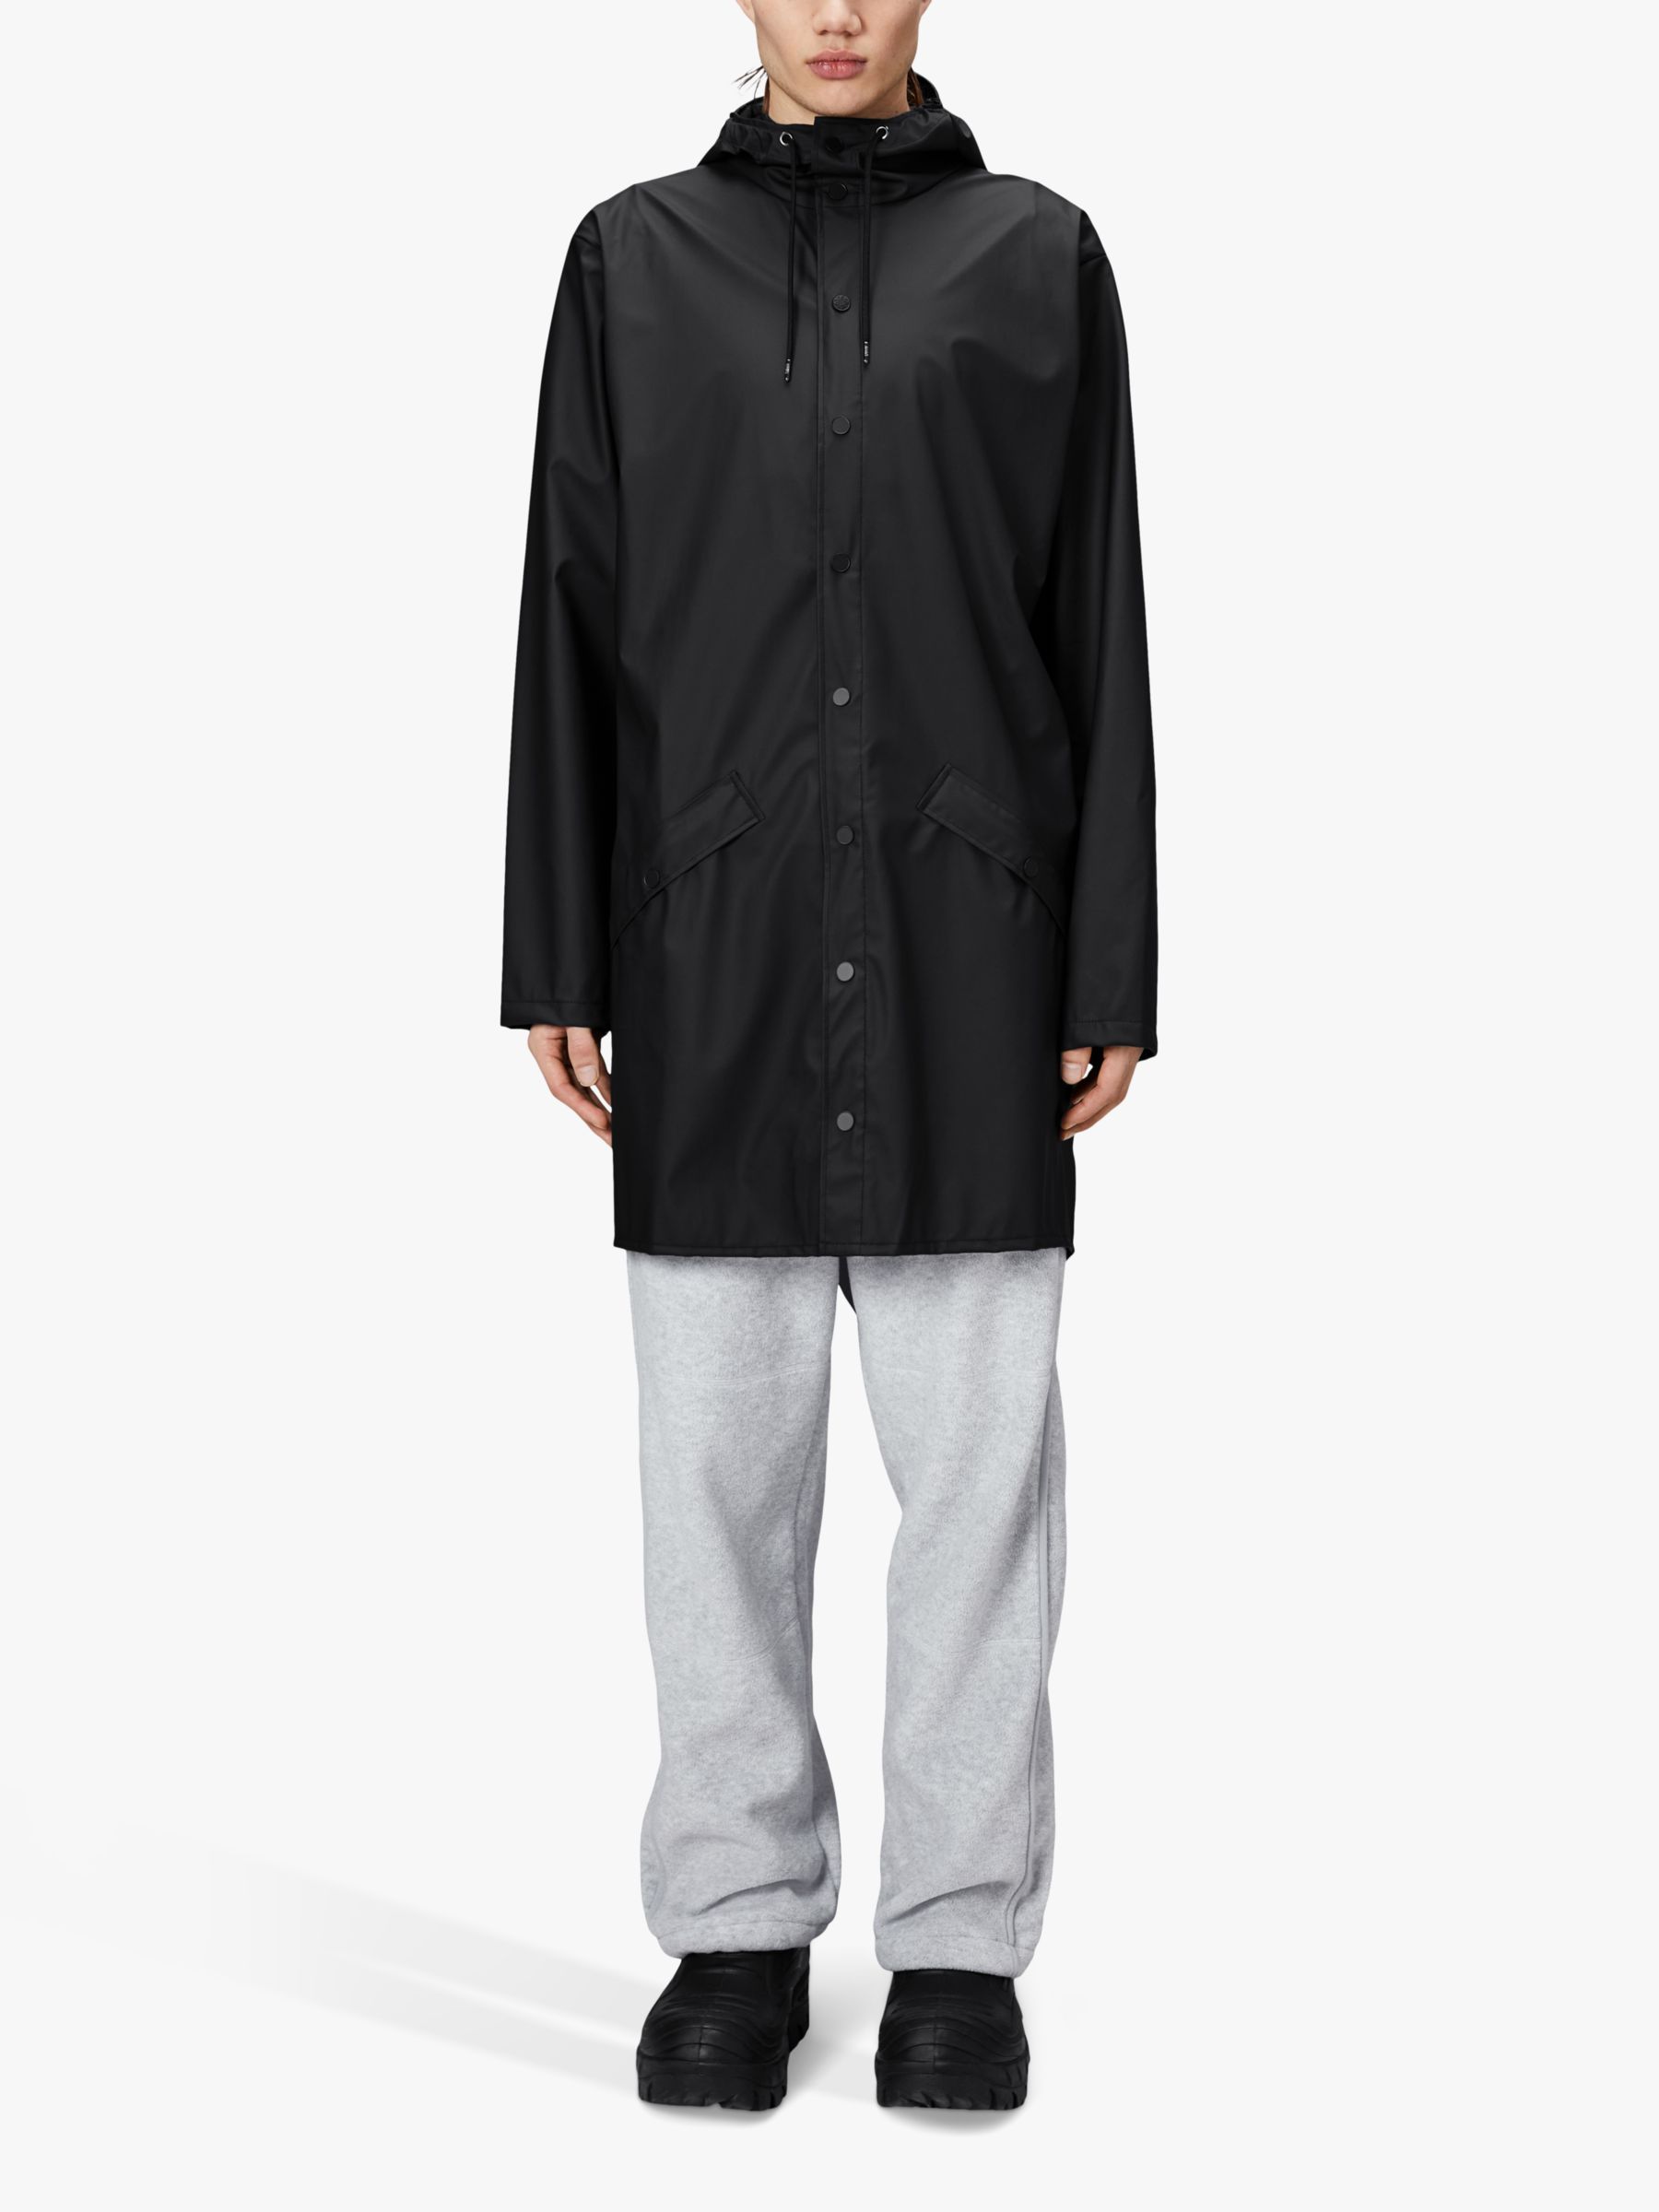 Rains Unisex Waterproof Long Rain Jacket, 01 Black, XL